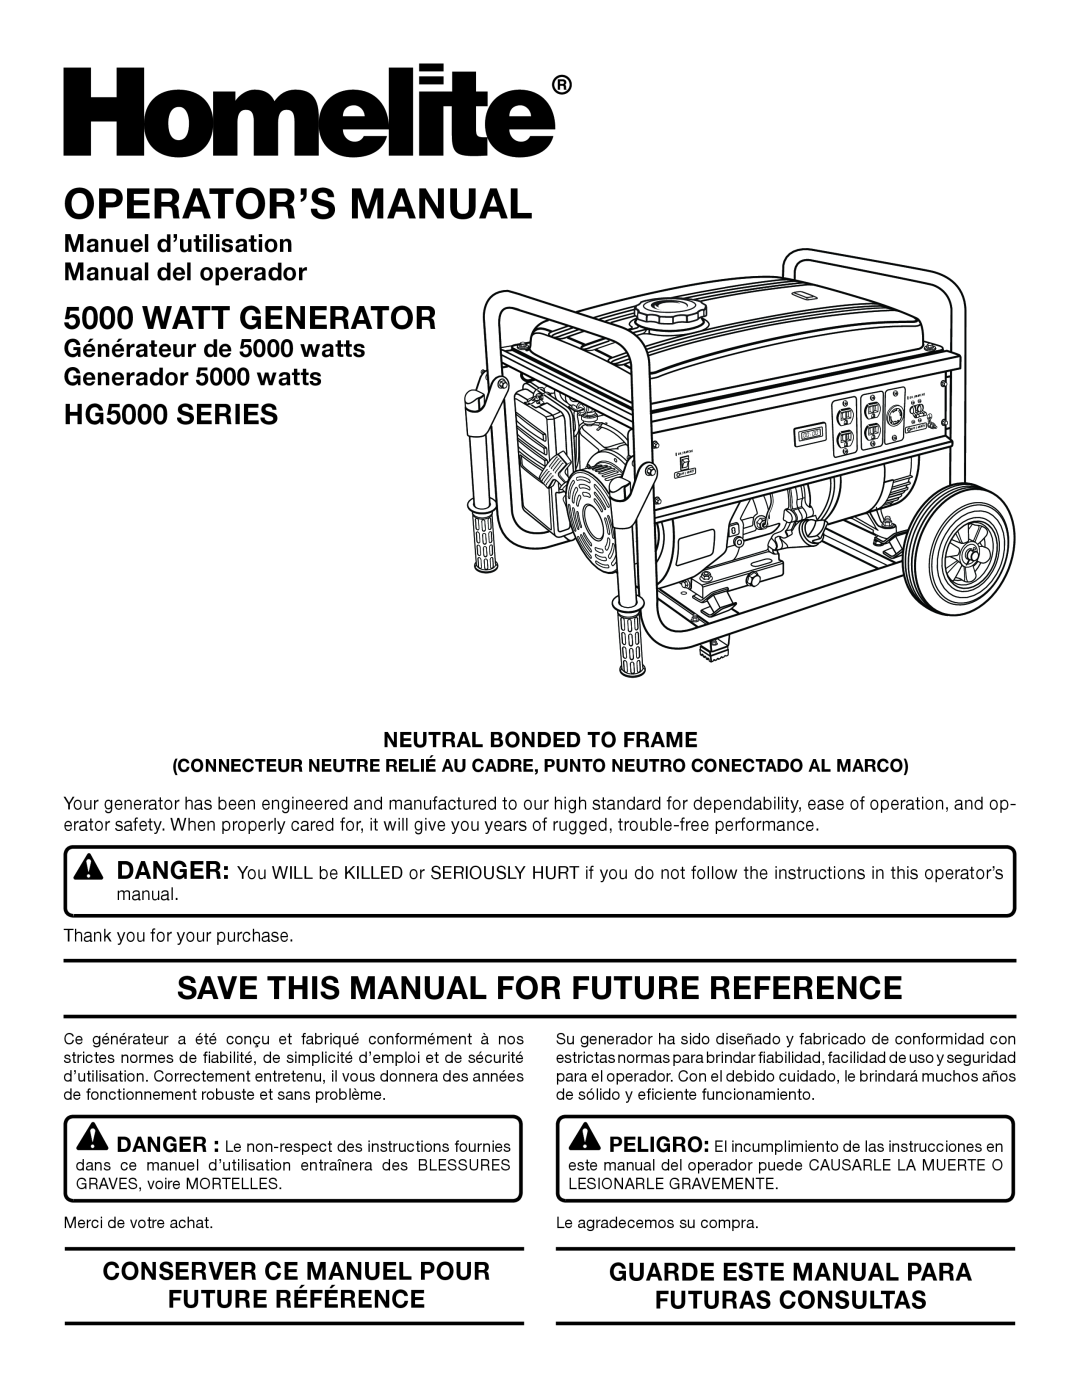 Homelite manuel dutilisation Watt Generator, Save This Manual For Future Reference, HG5000 Series, Operator’S Manual 